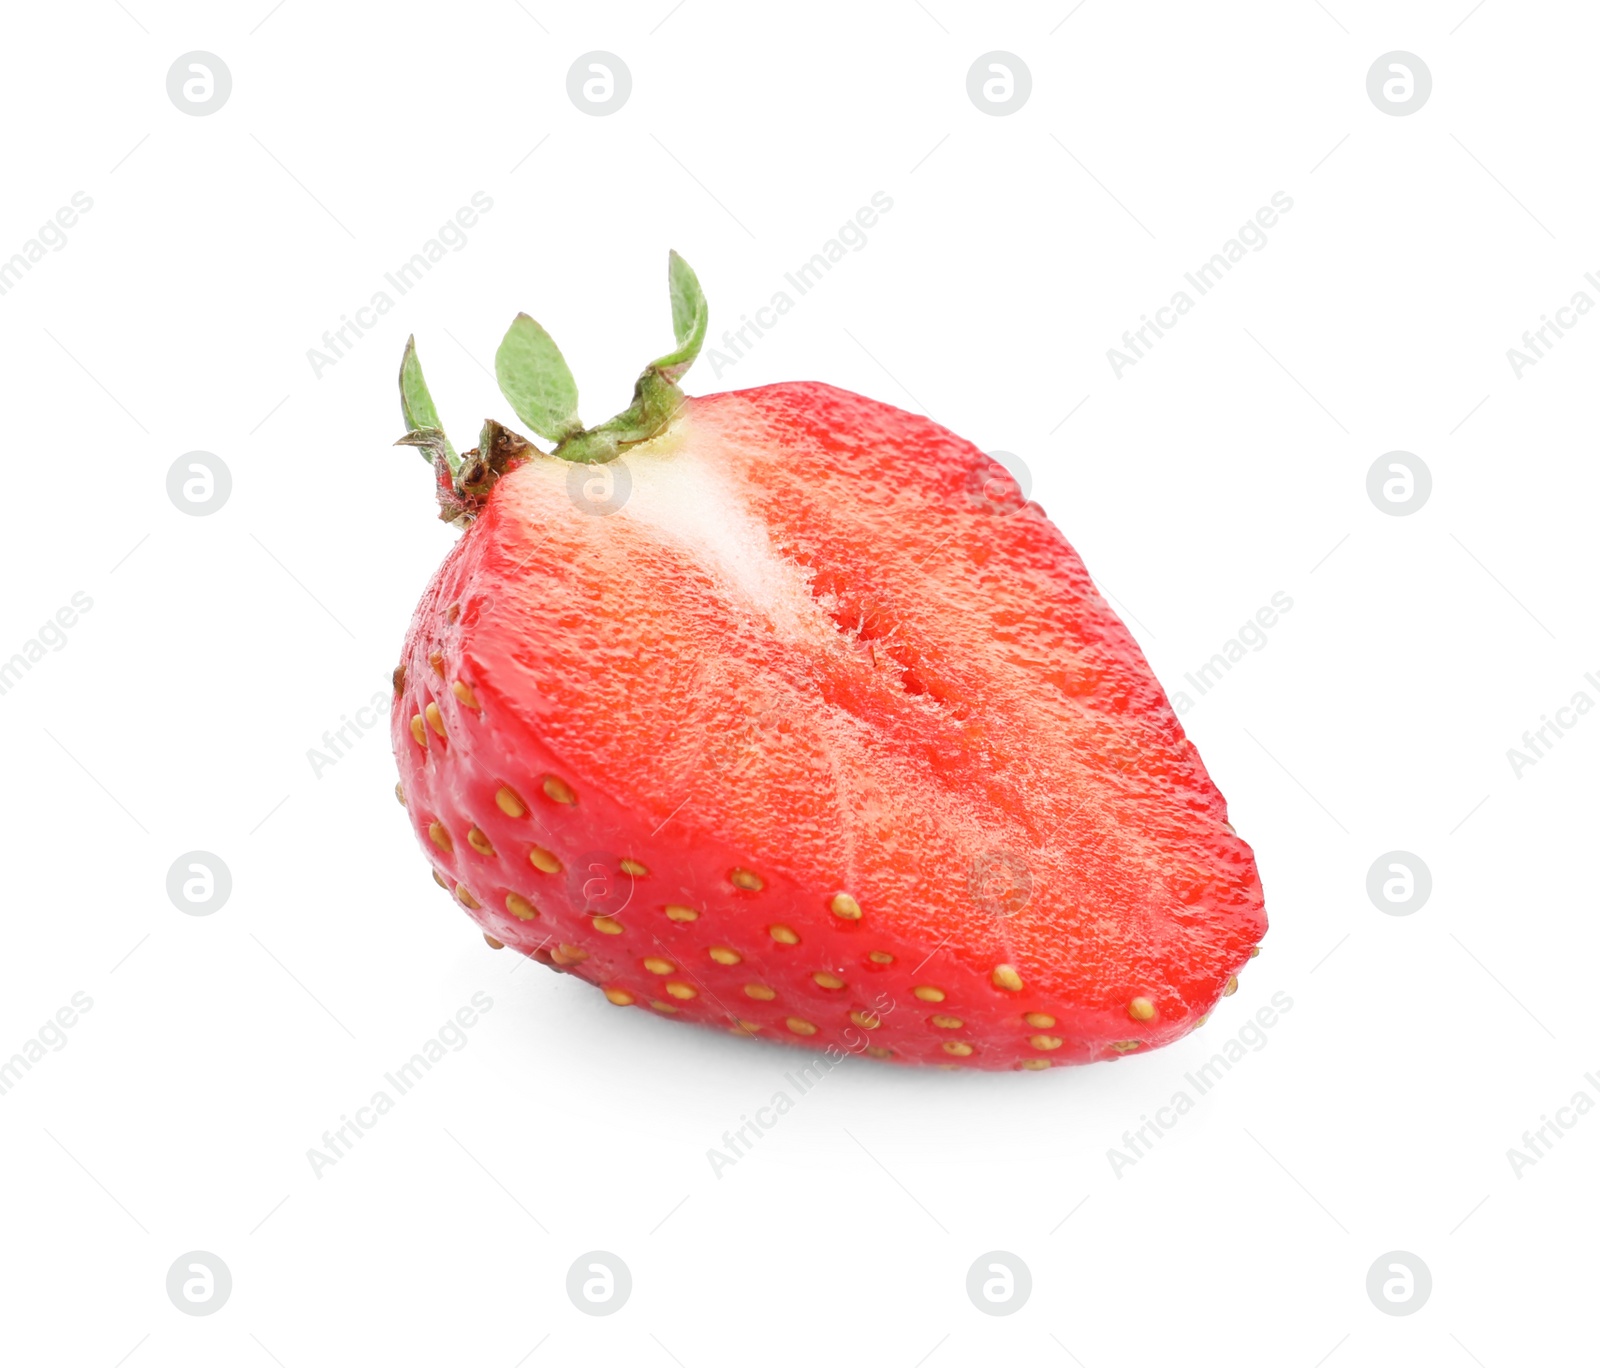 Photo of Cut fresh ripe  strawberry isolated on white